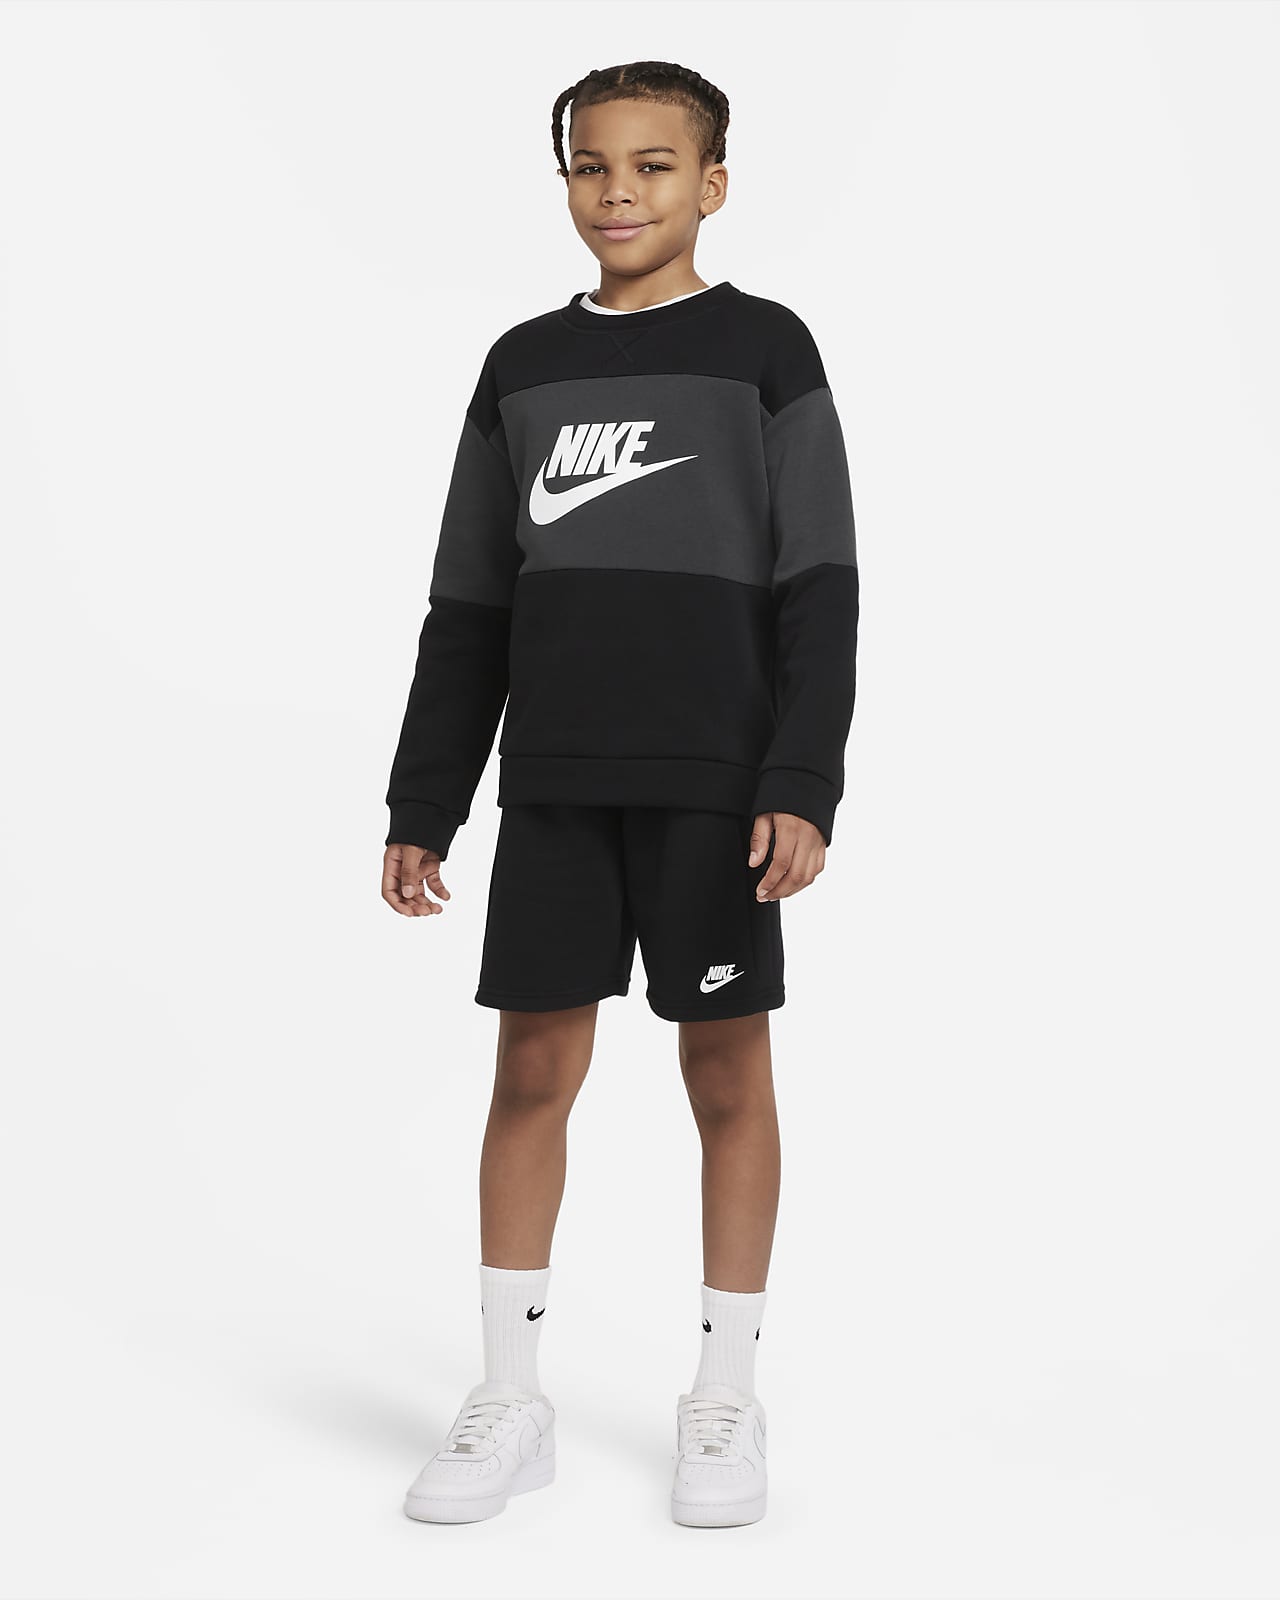 fout verklaren Ontslag nemen Nike Sportswear Big Kids' French Terry Tracksuit. Nike.com